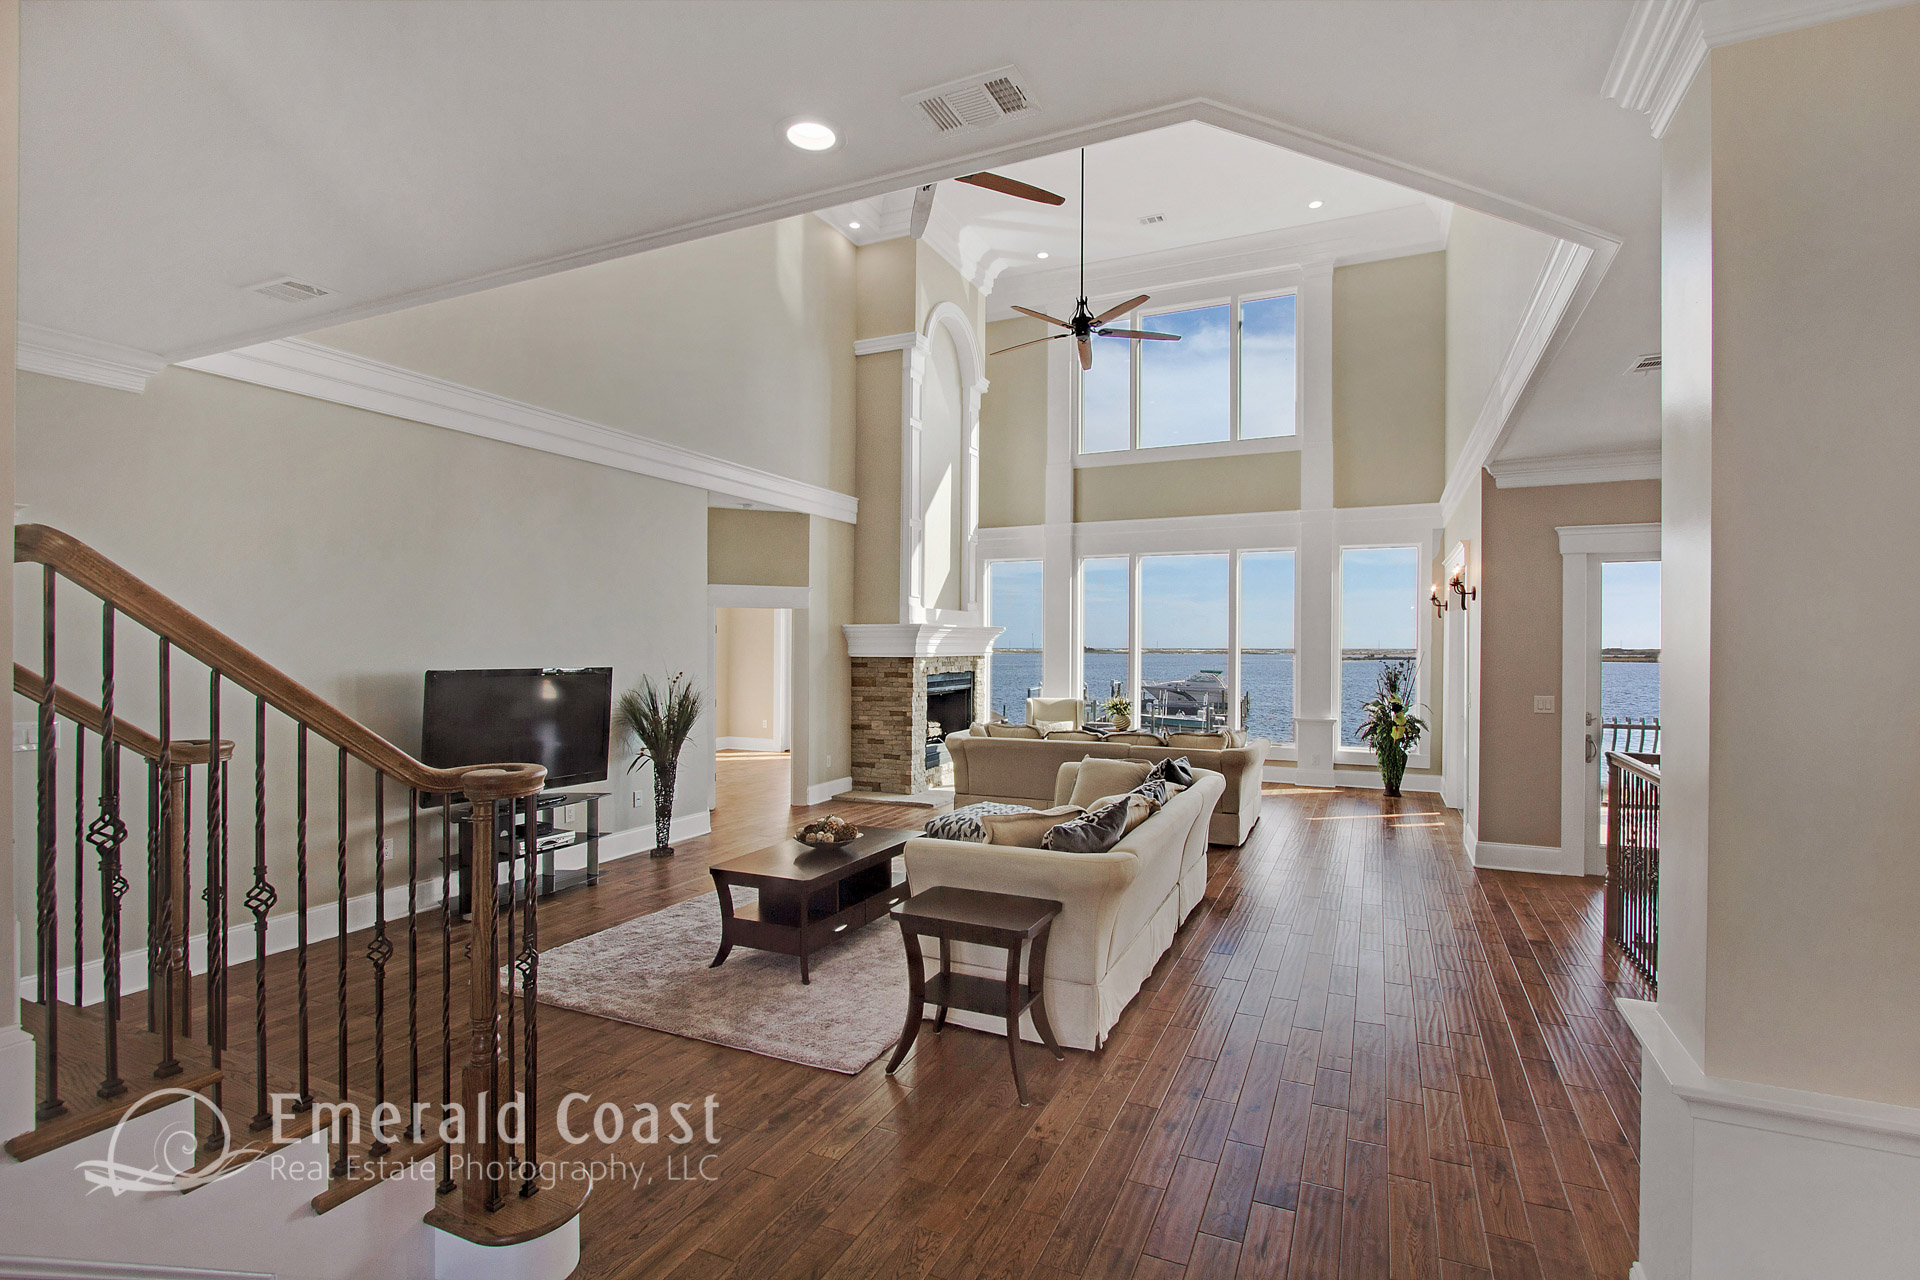 Emerald Coast Real Estate Photography » Fort Walton Beach ...